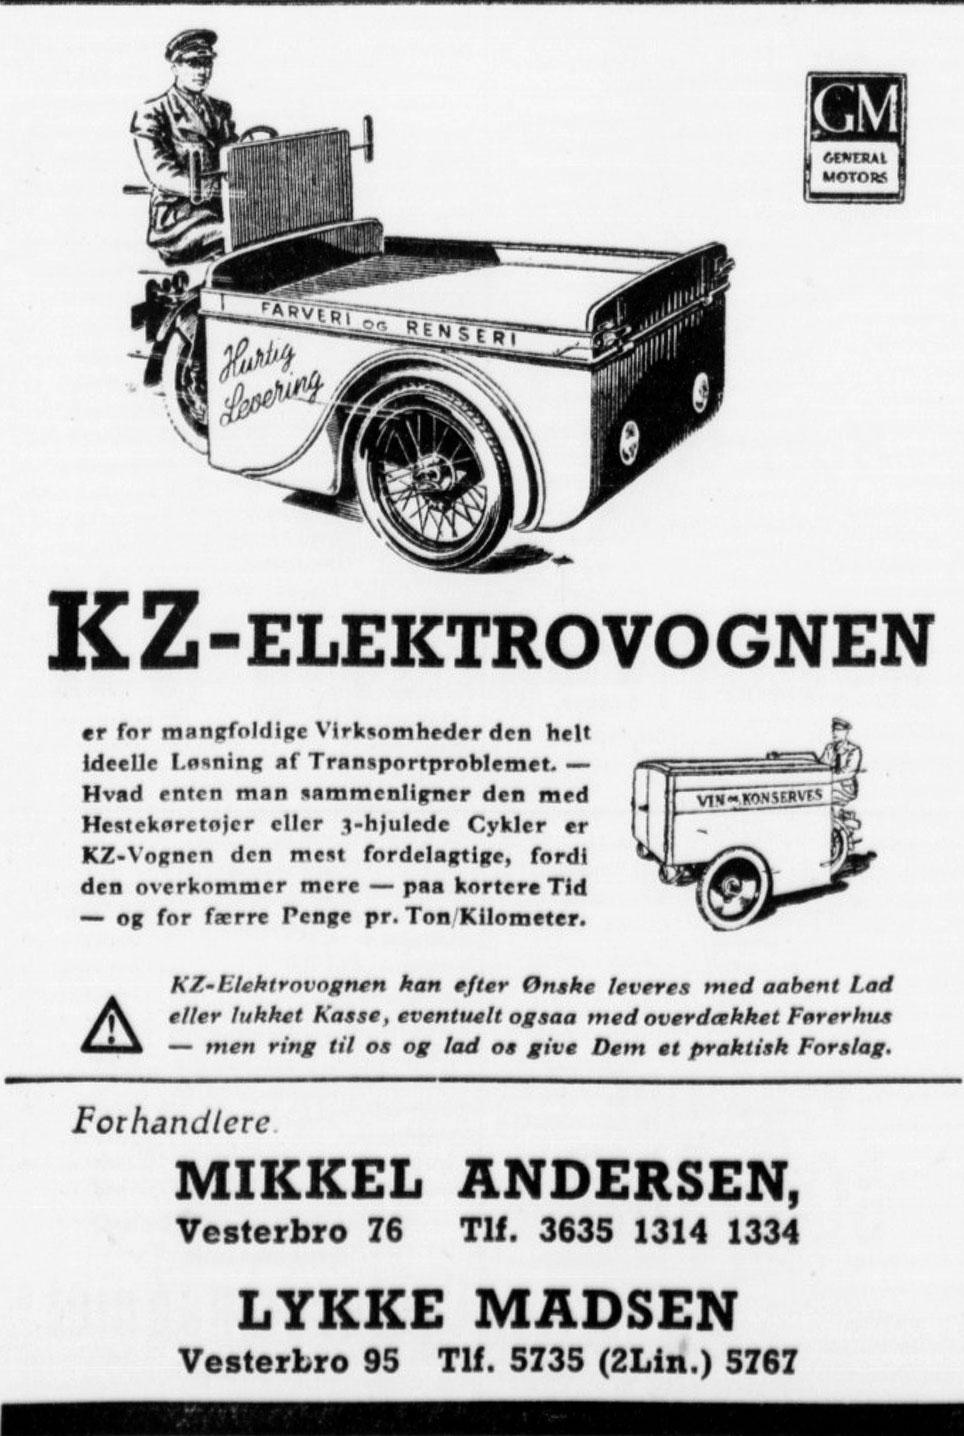 Annonce i Aalborg Stiftstidende, 19. maj 1942